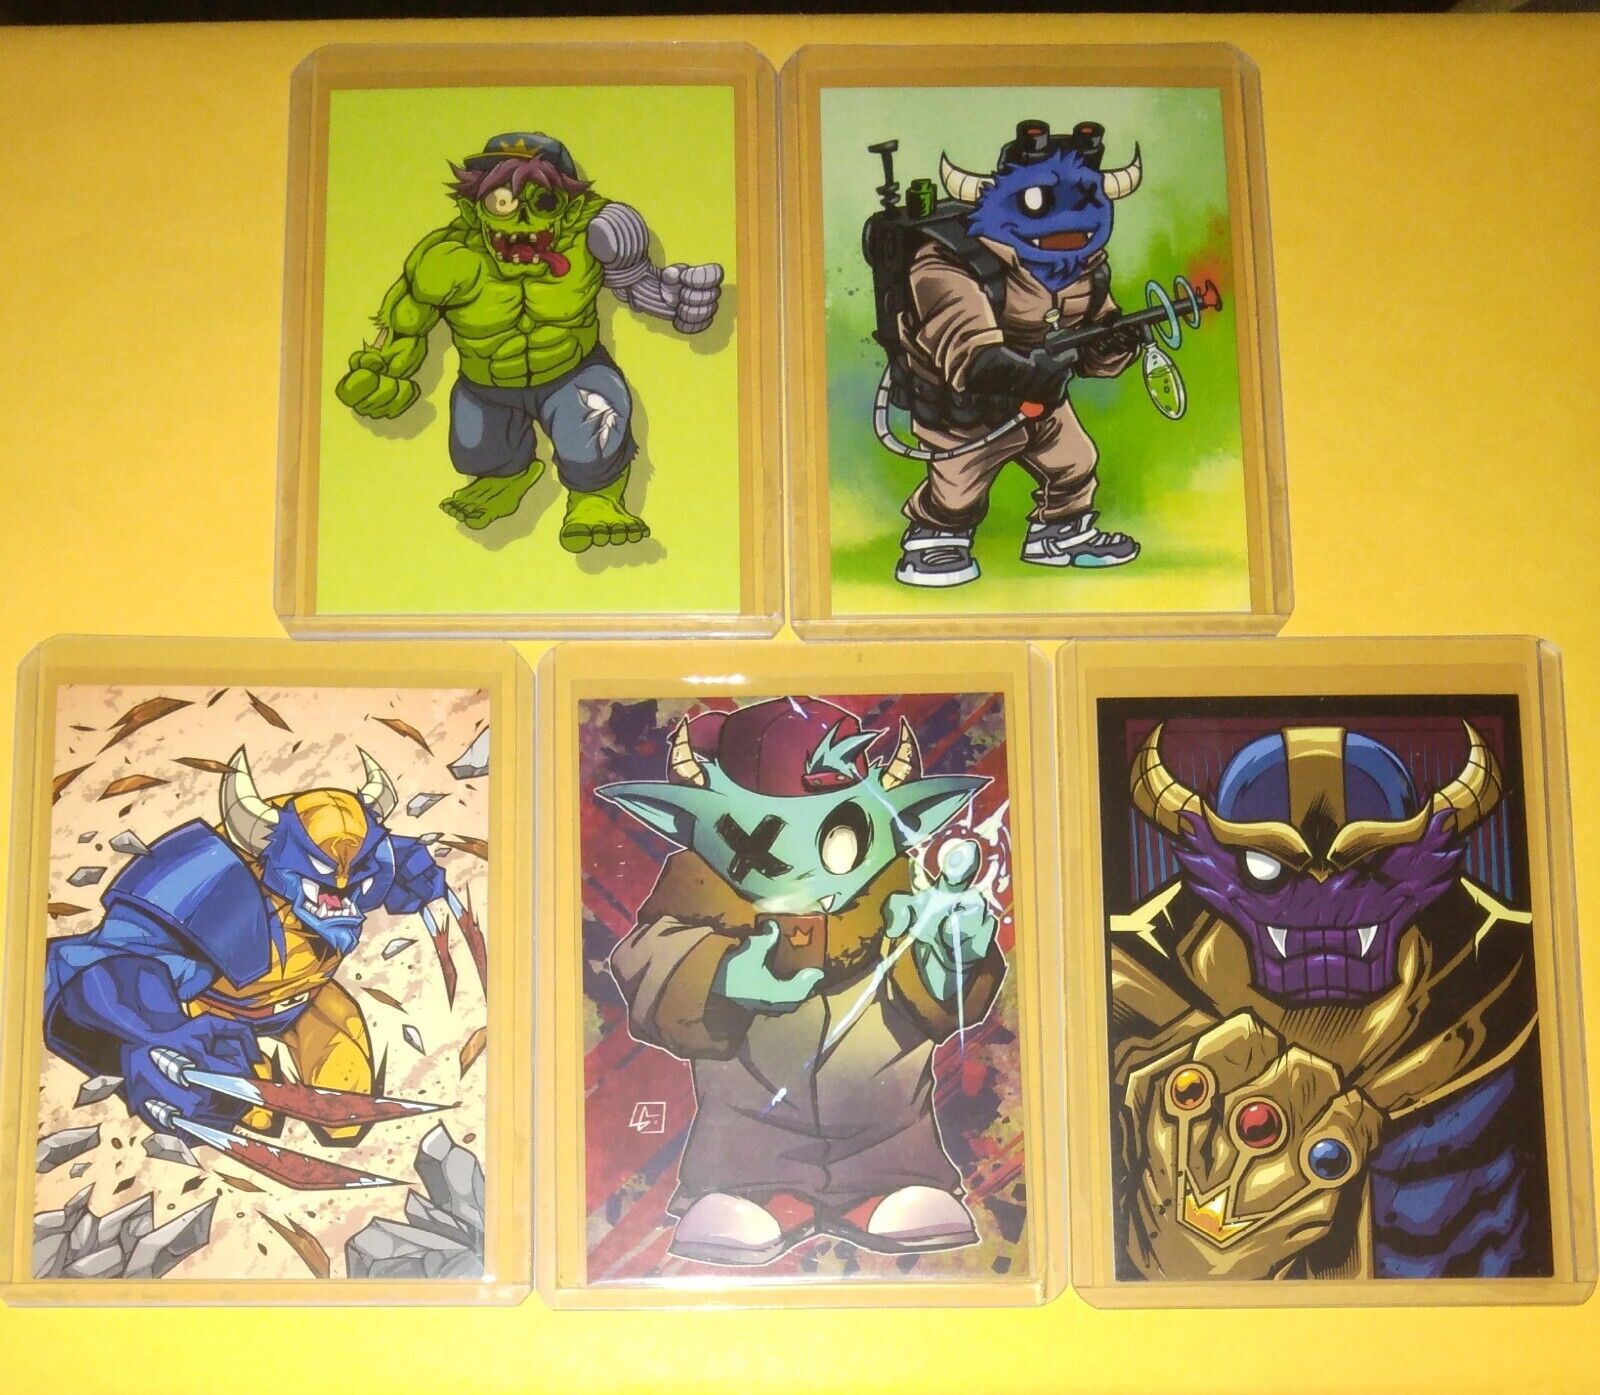 BAM Box Big Beast trading card LOT of 5: Hulk Wolverine Thanos Ghostbusters Yoda